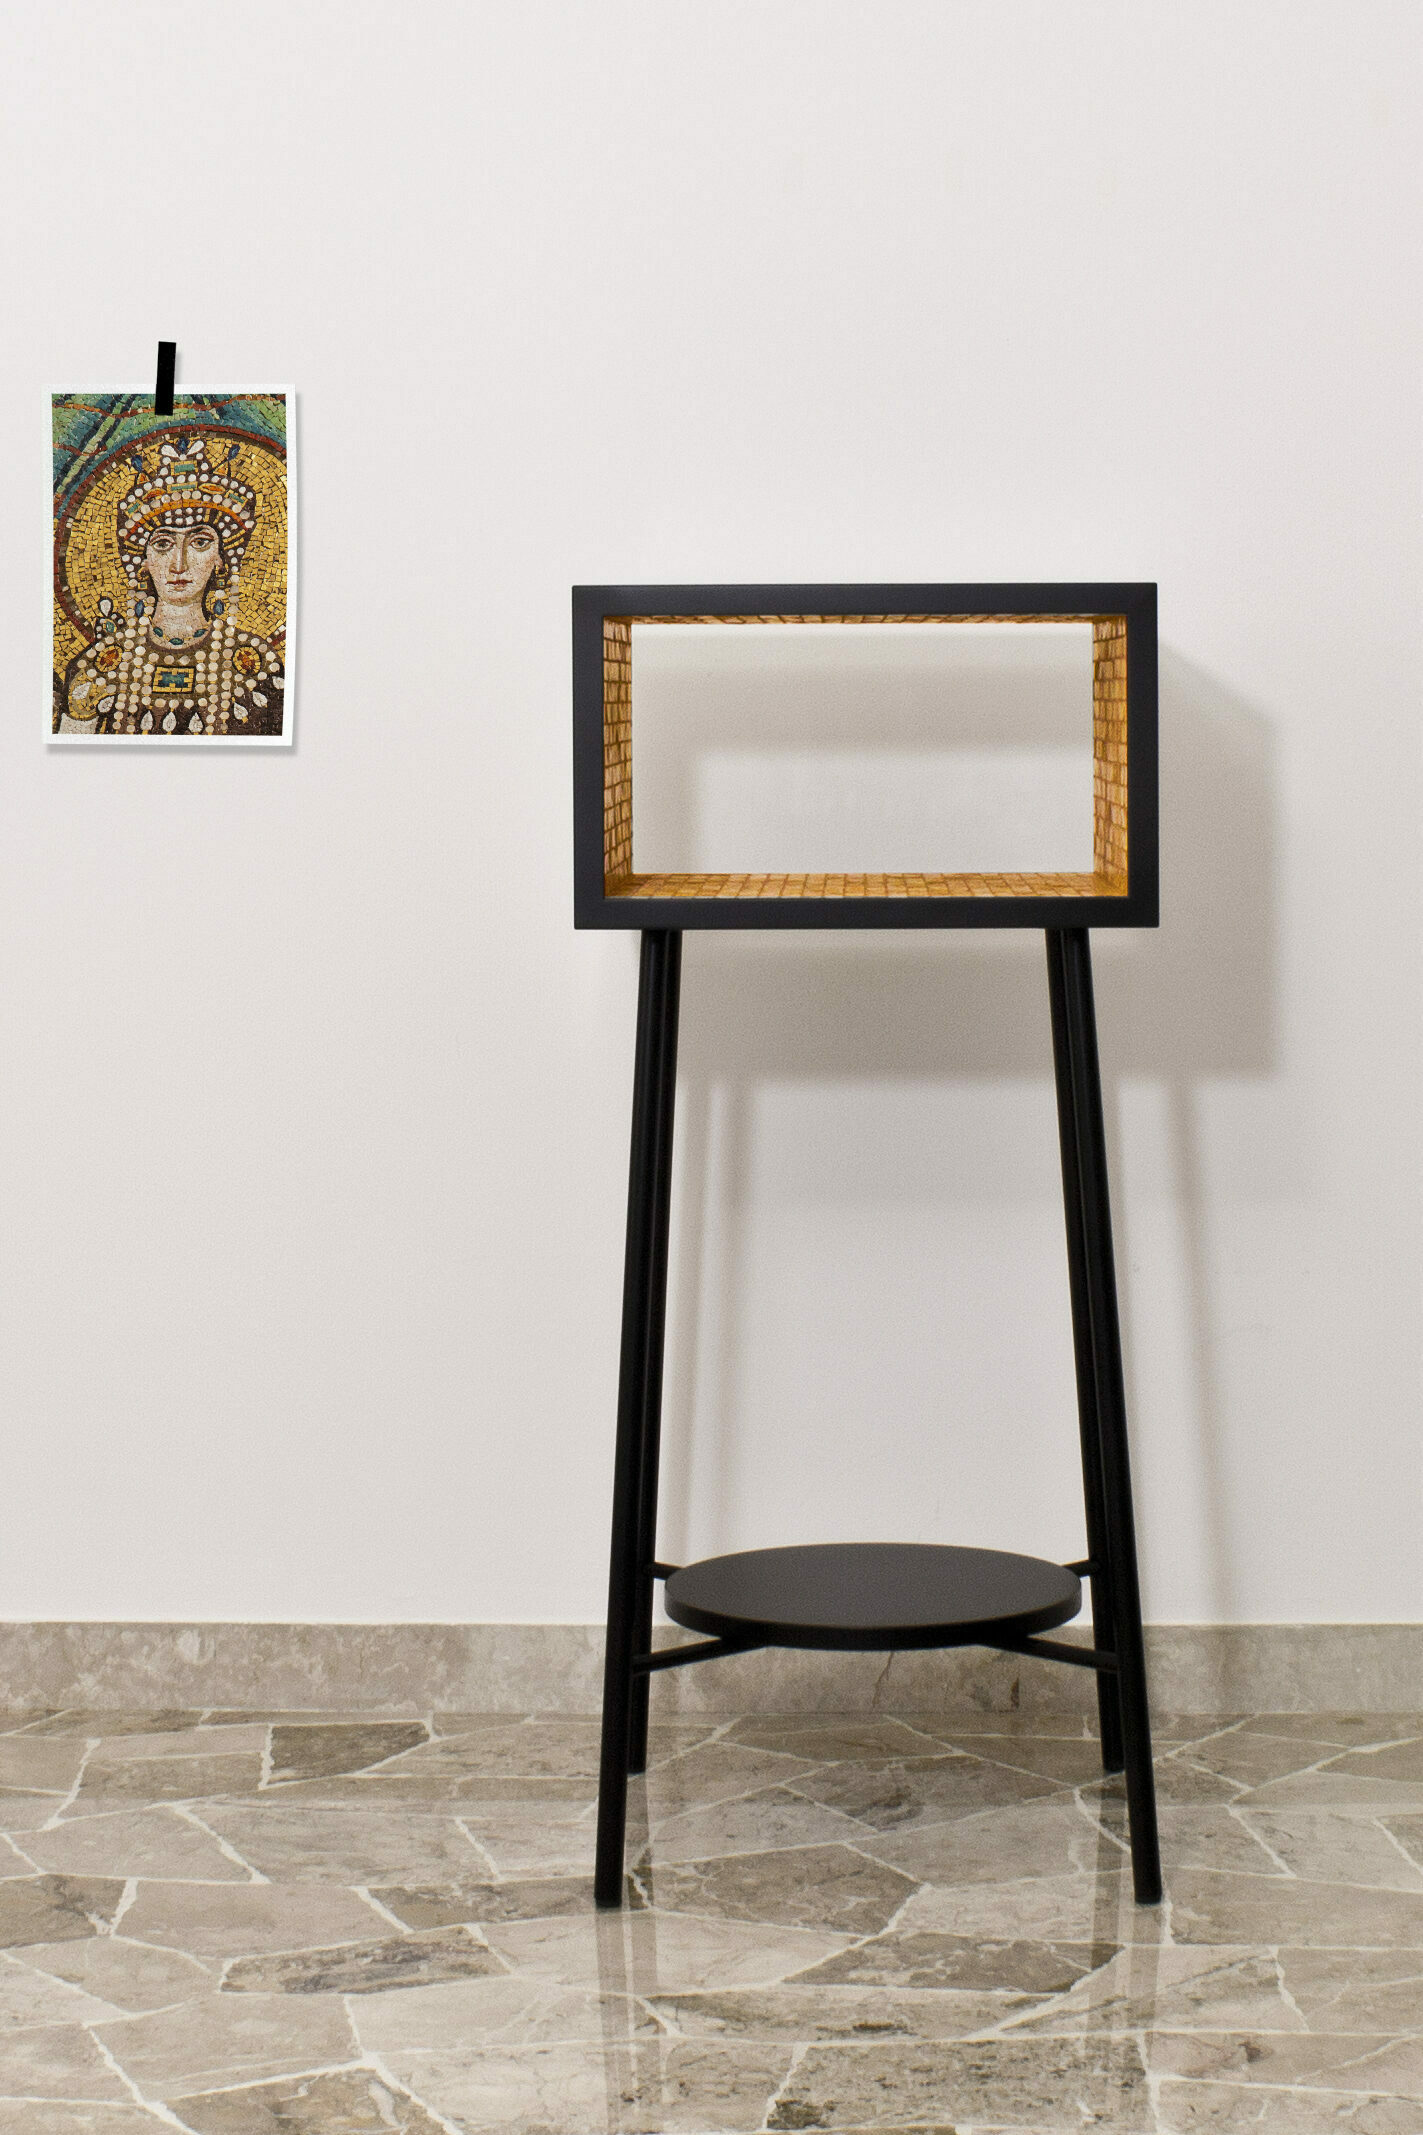 byzantine collection davide g. aquini sideboard holz metall mosaik marmor gold perlmutt design inneneinrichtung einrichtungsidee